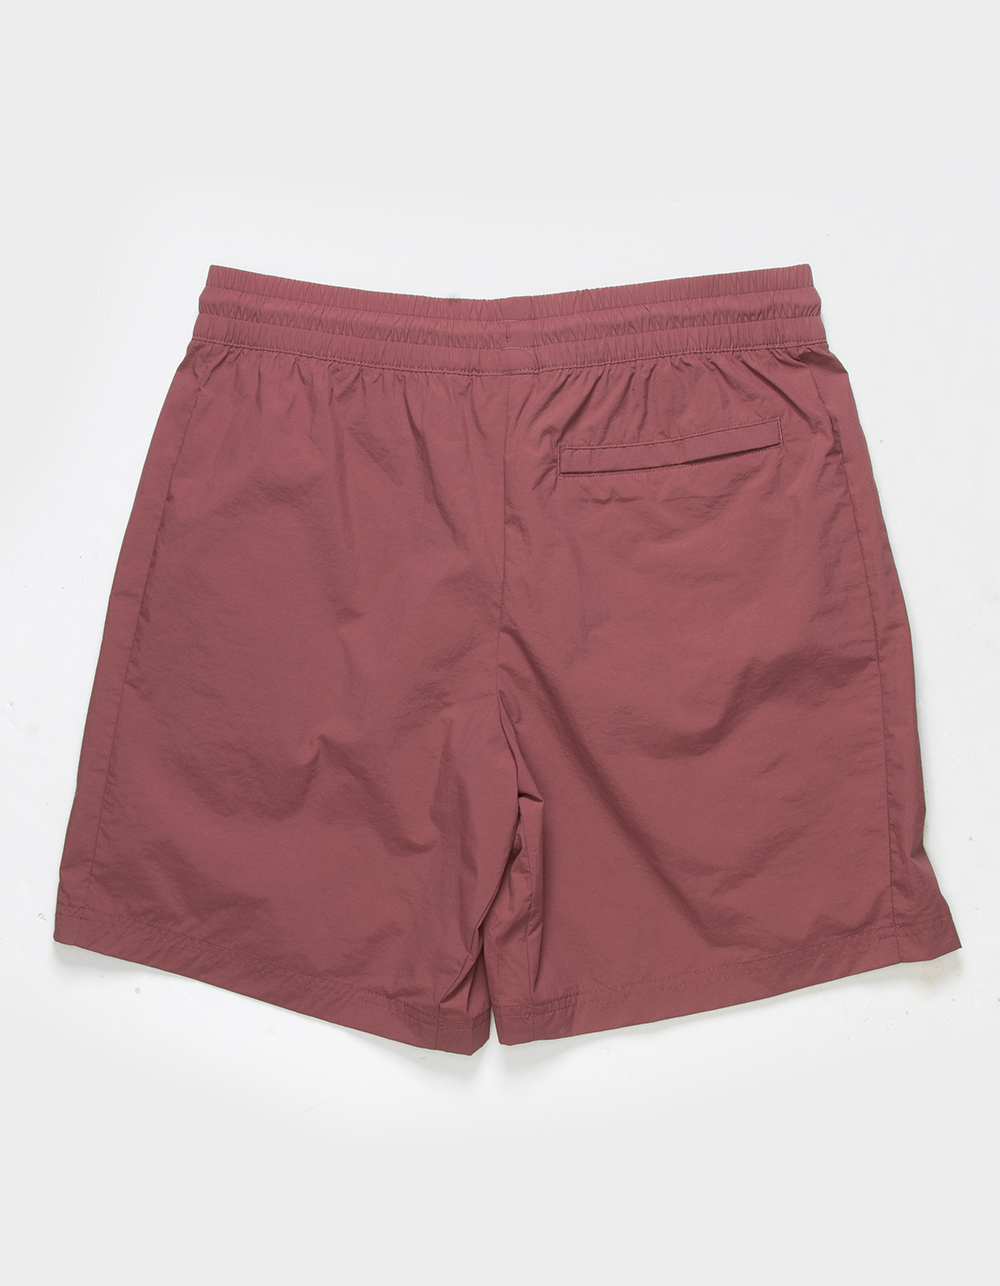 NEW BALANCE Mens Athletic Shorts - MAUVE | Tillys